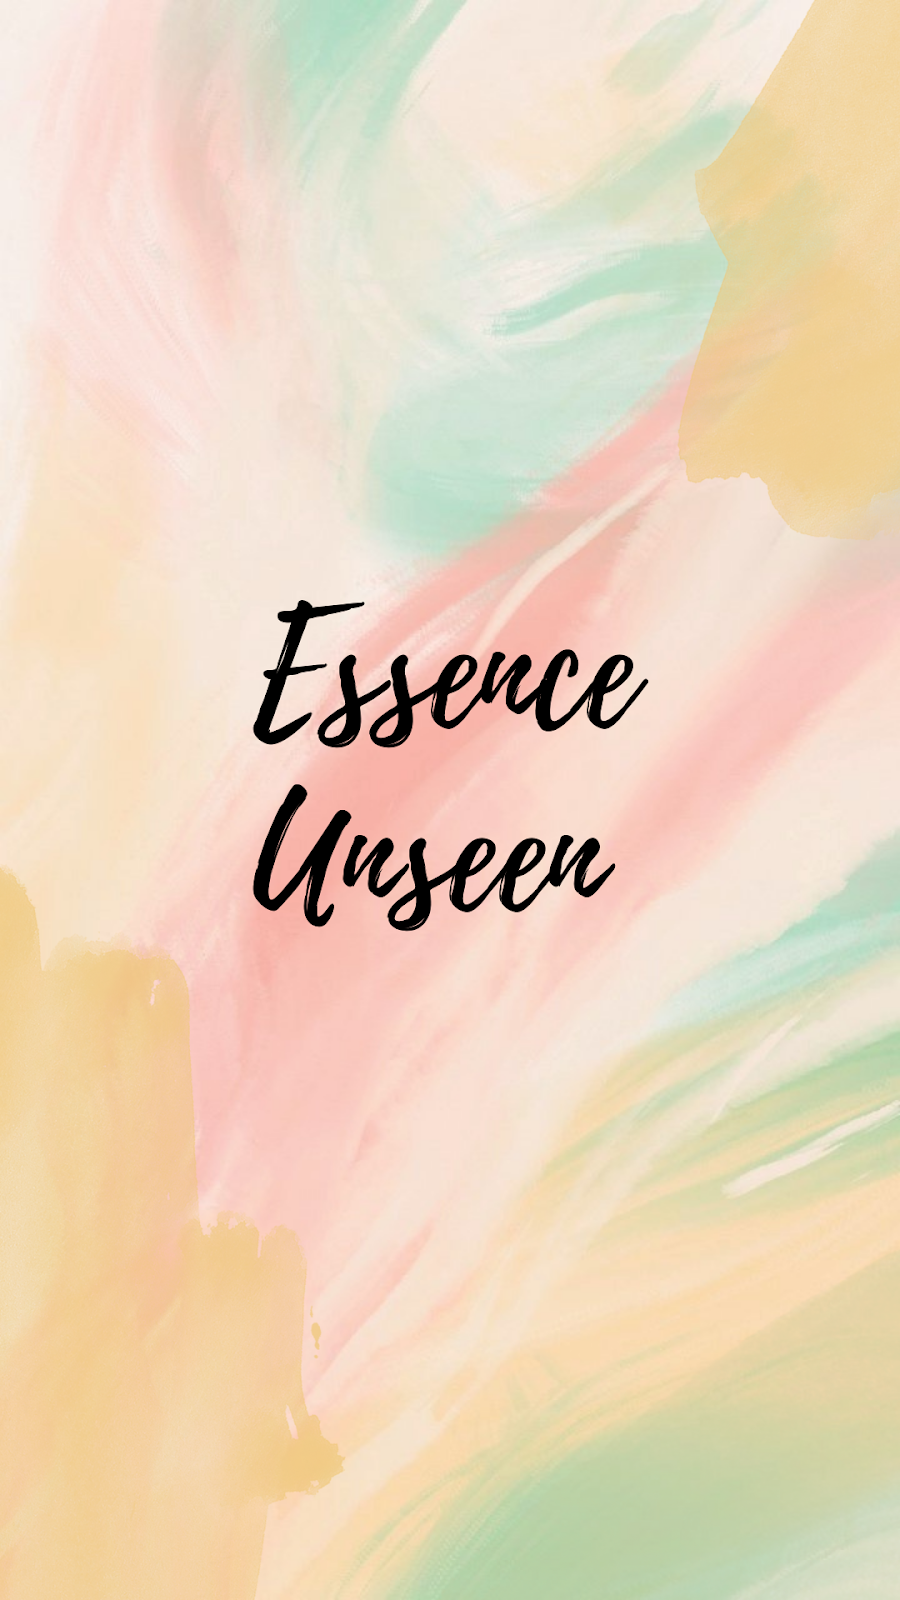 essence unseen